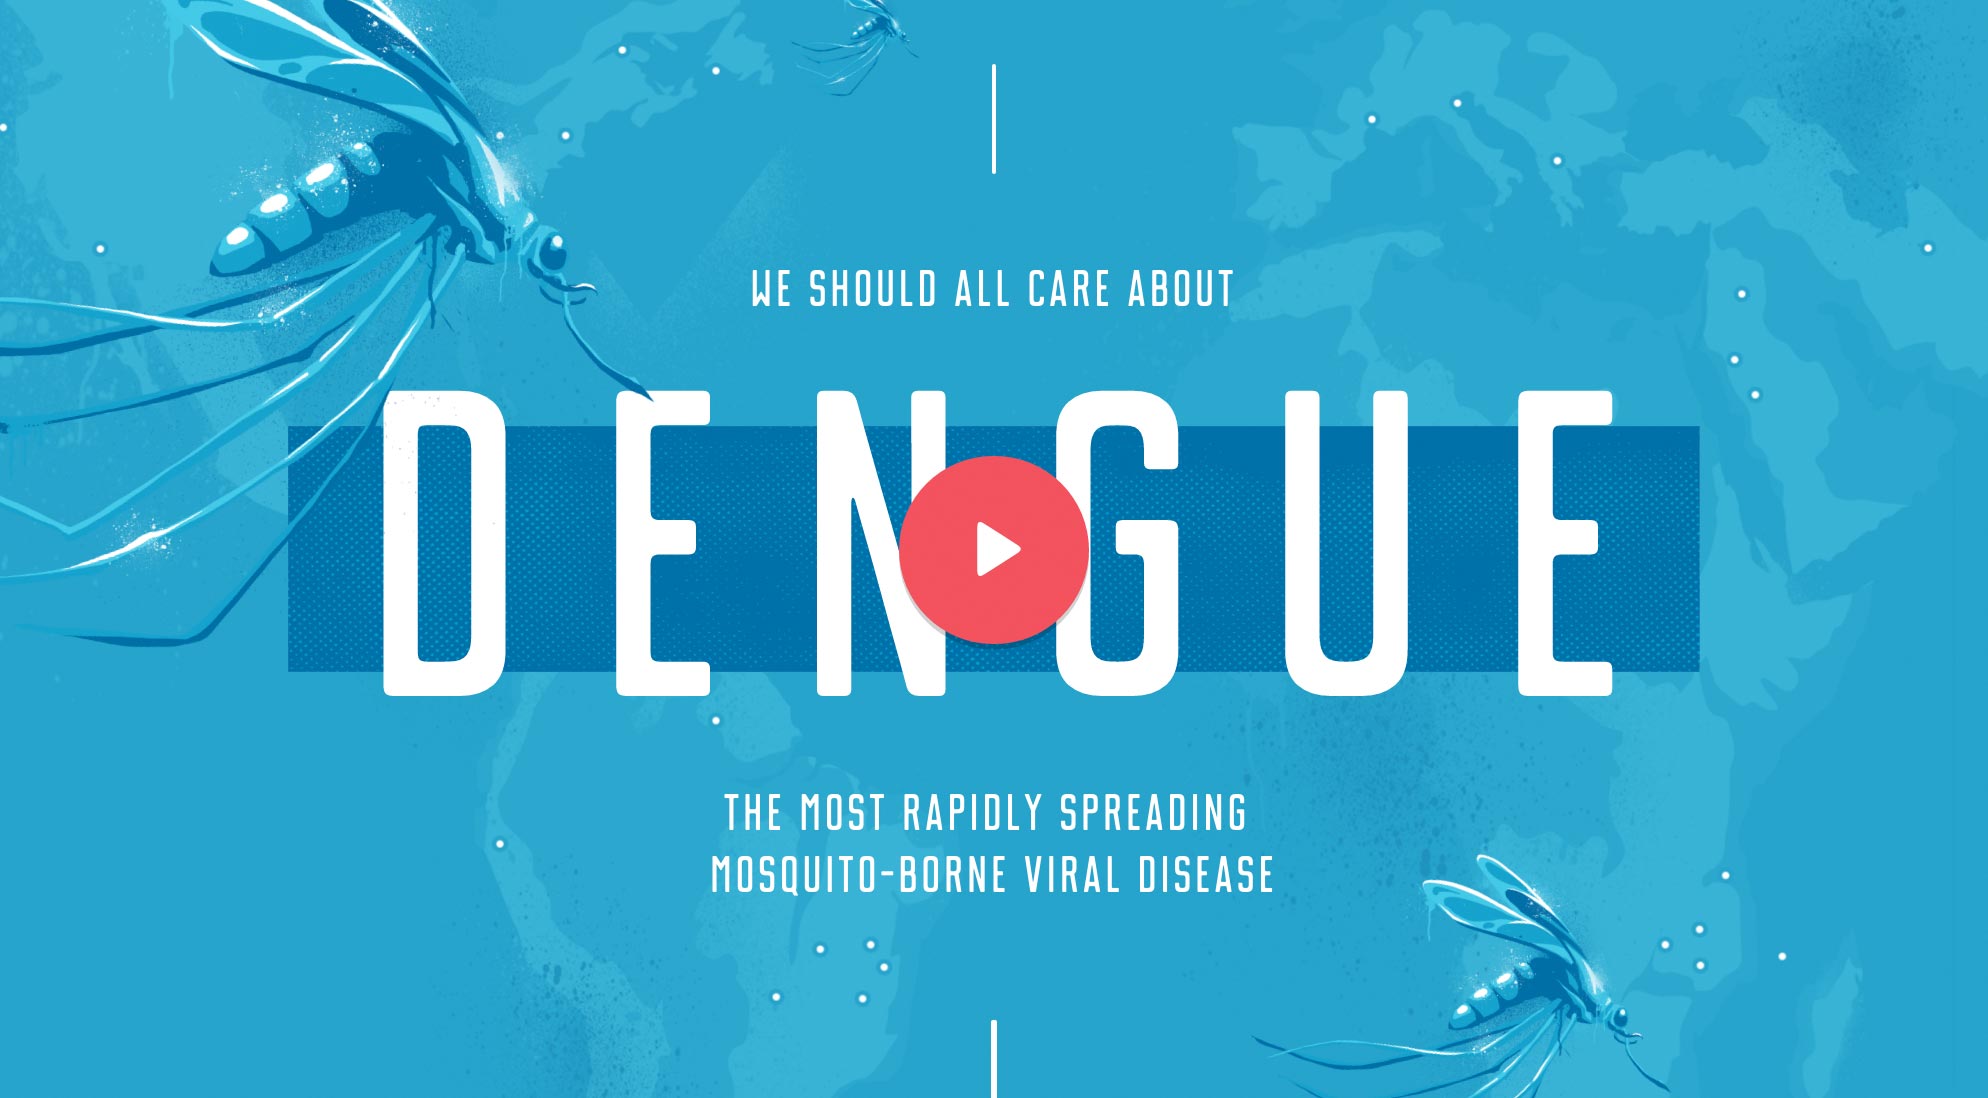 Video about Dengue